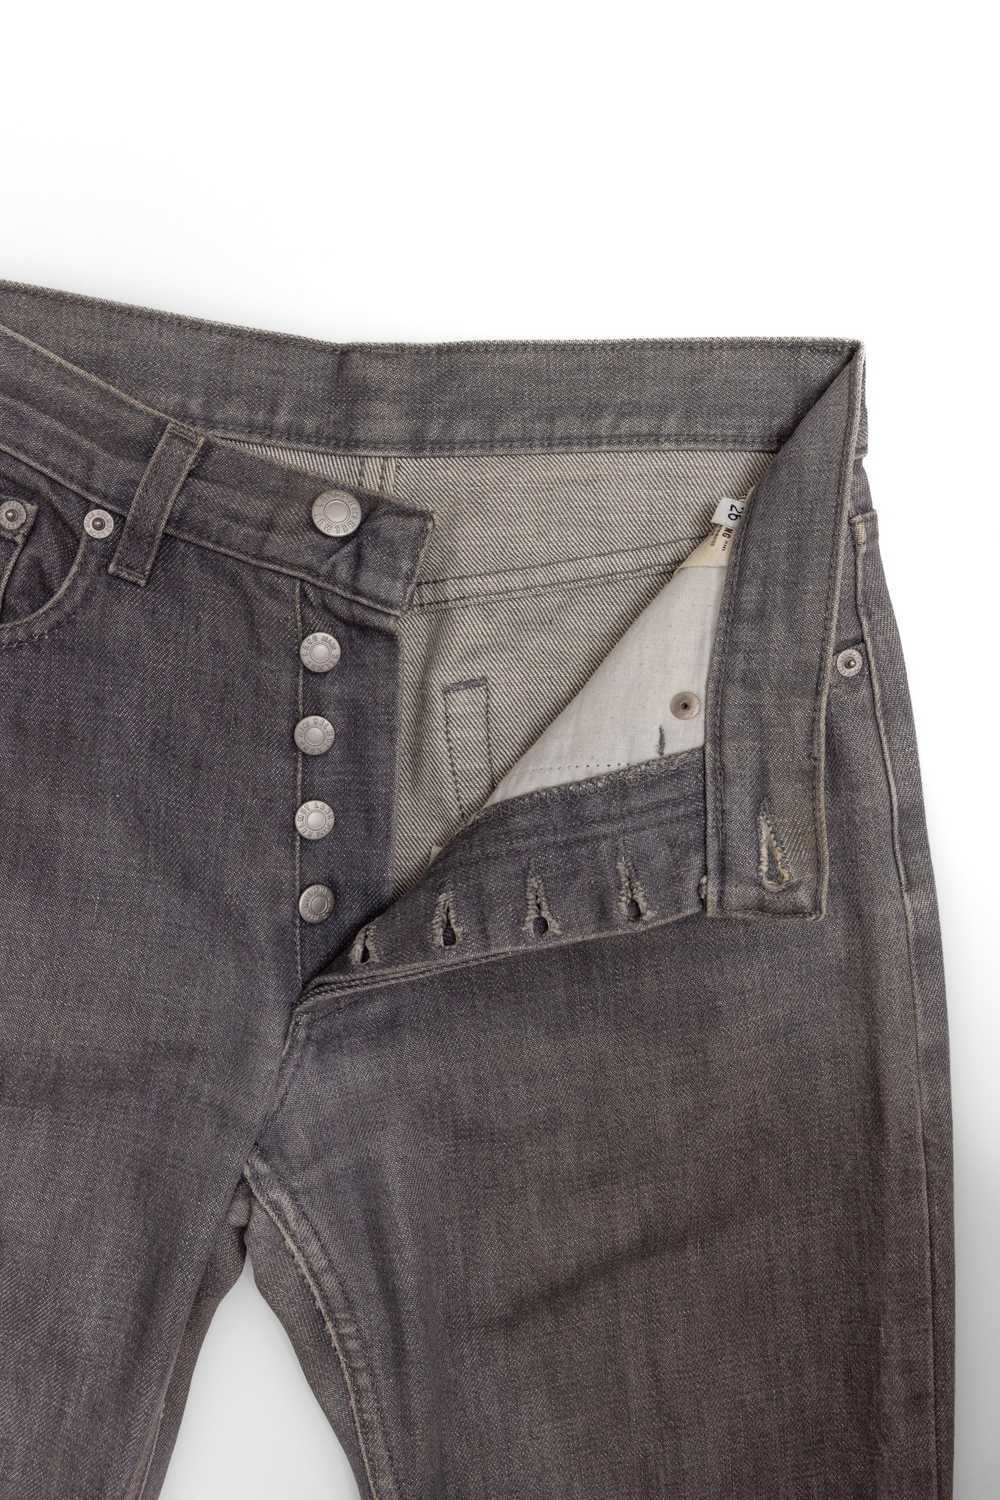 Helmut Lang Grey Classic Raw Denim Jeans - image 3